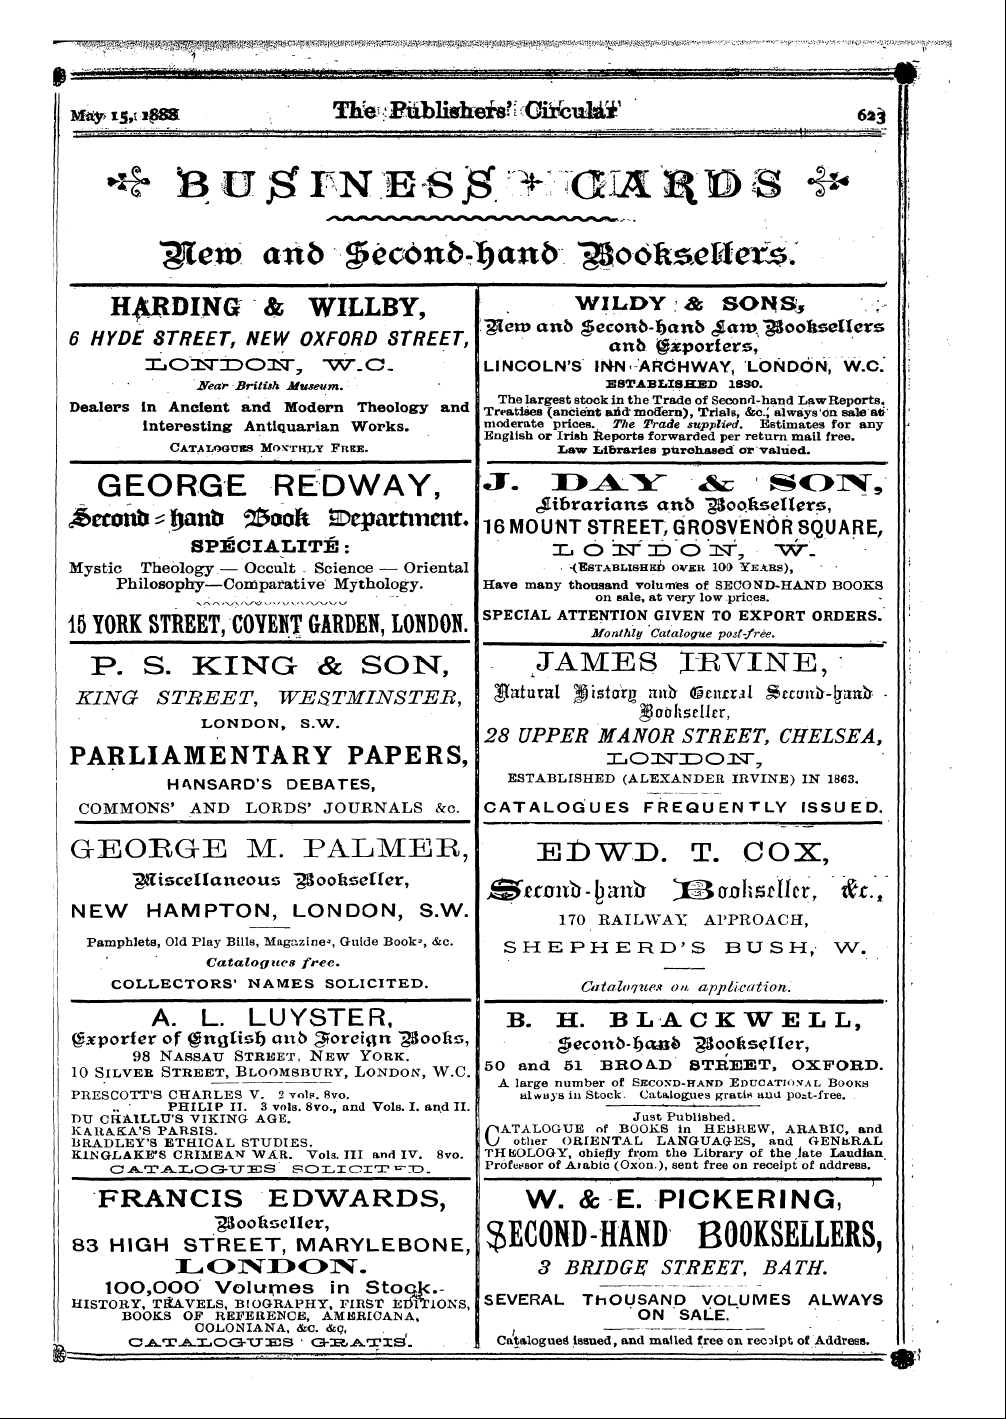 Publishers’ Circular (1880-1890): jS F Y, 1st edition - Ad12502